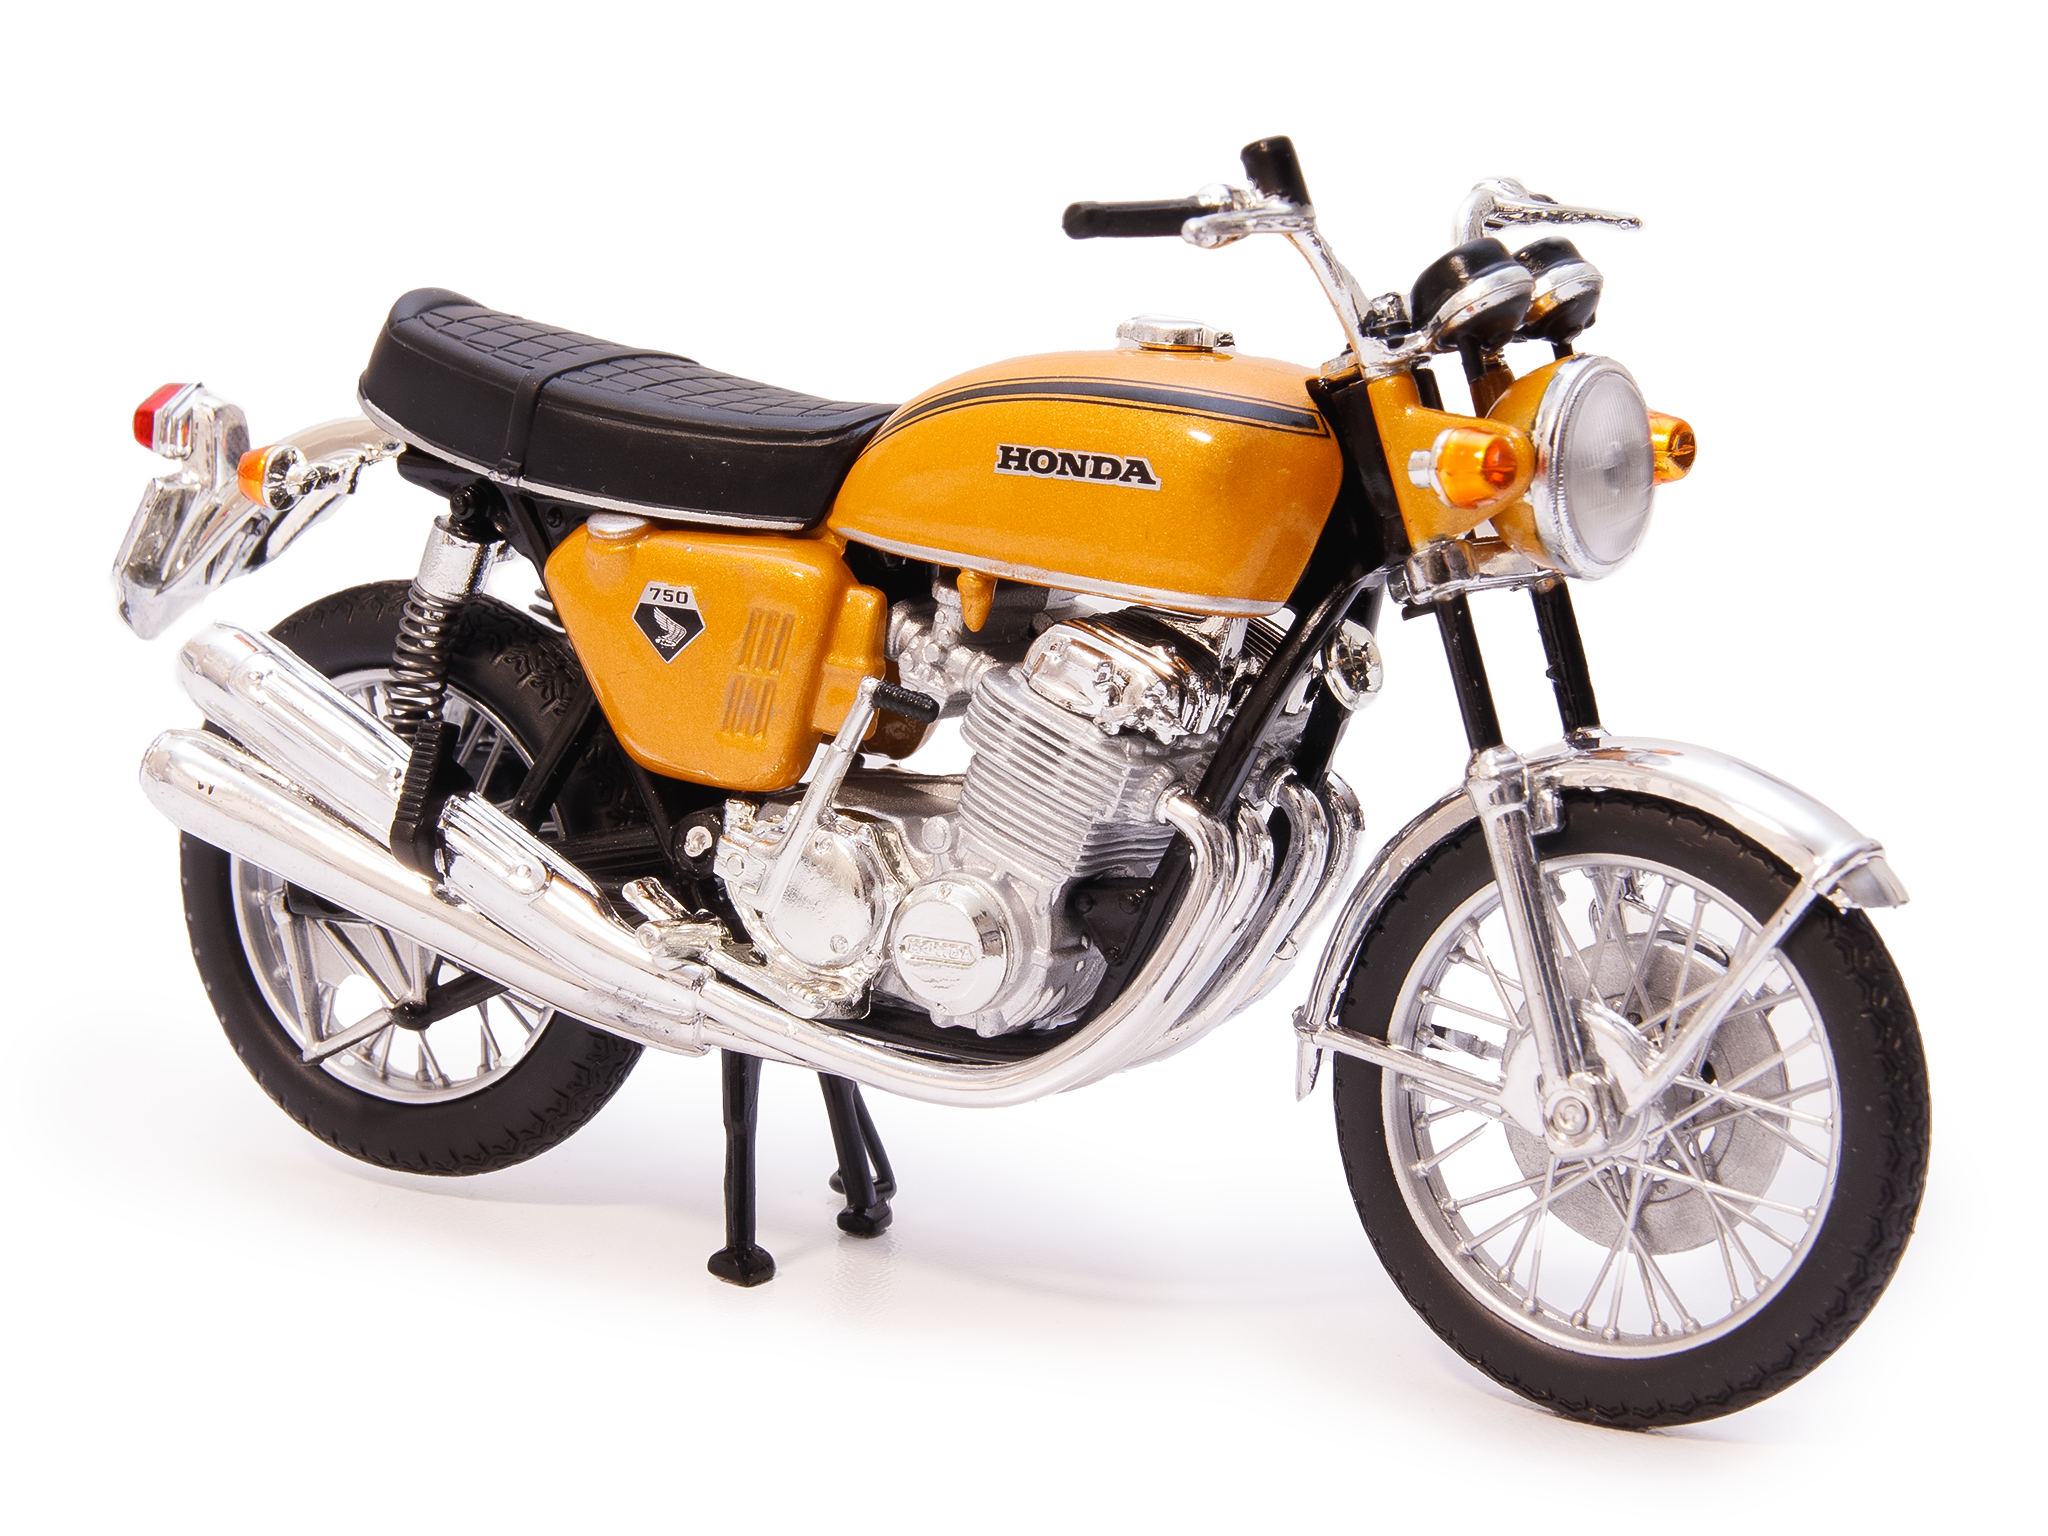 Honda CB750 1969 orange - 1:18 Scale Diecast Model Motorcycle